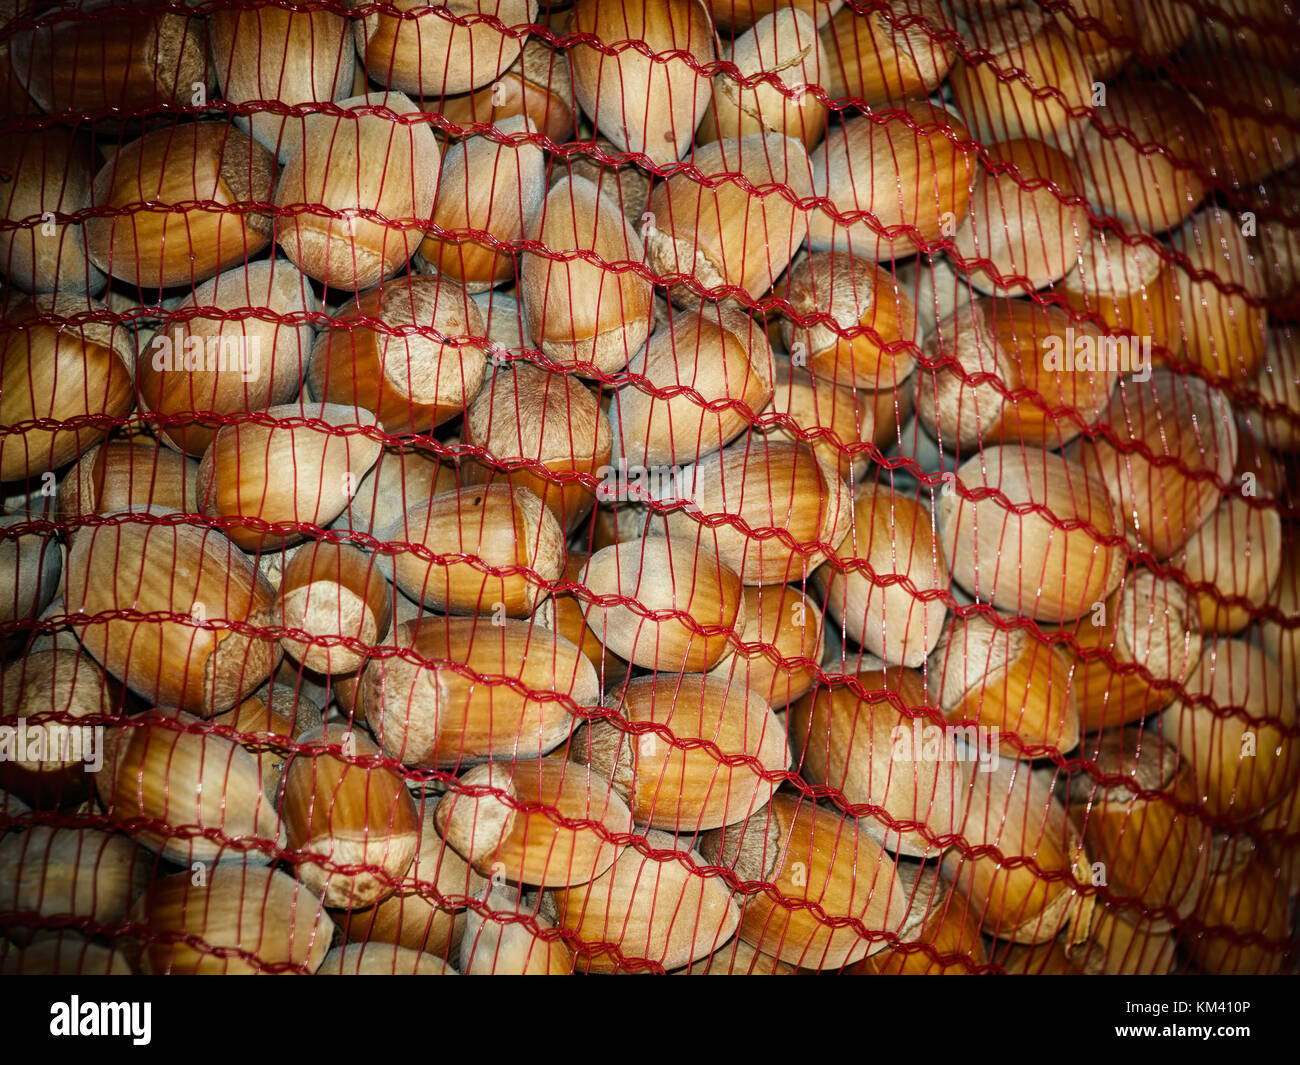 Detail of a net sack full of hazelnuts. Stock Photo